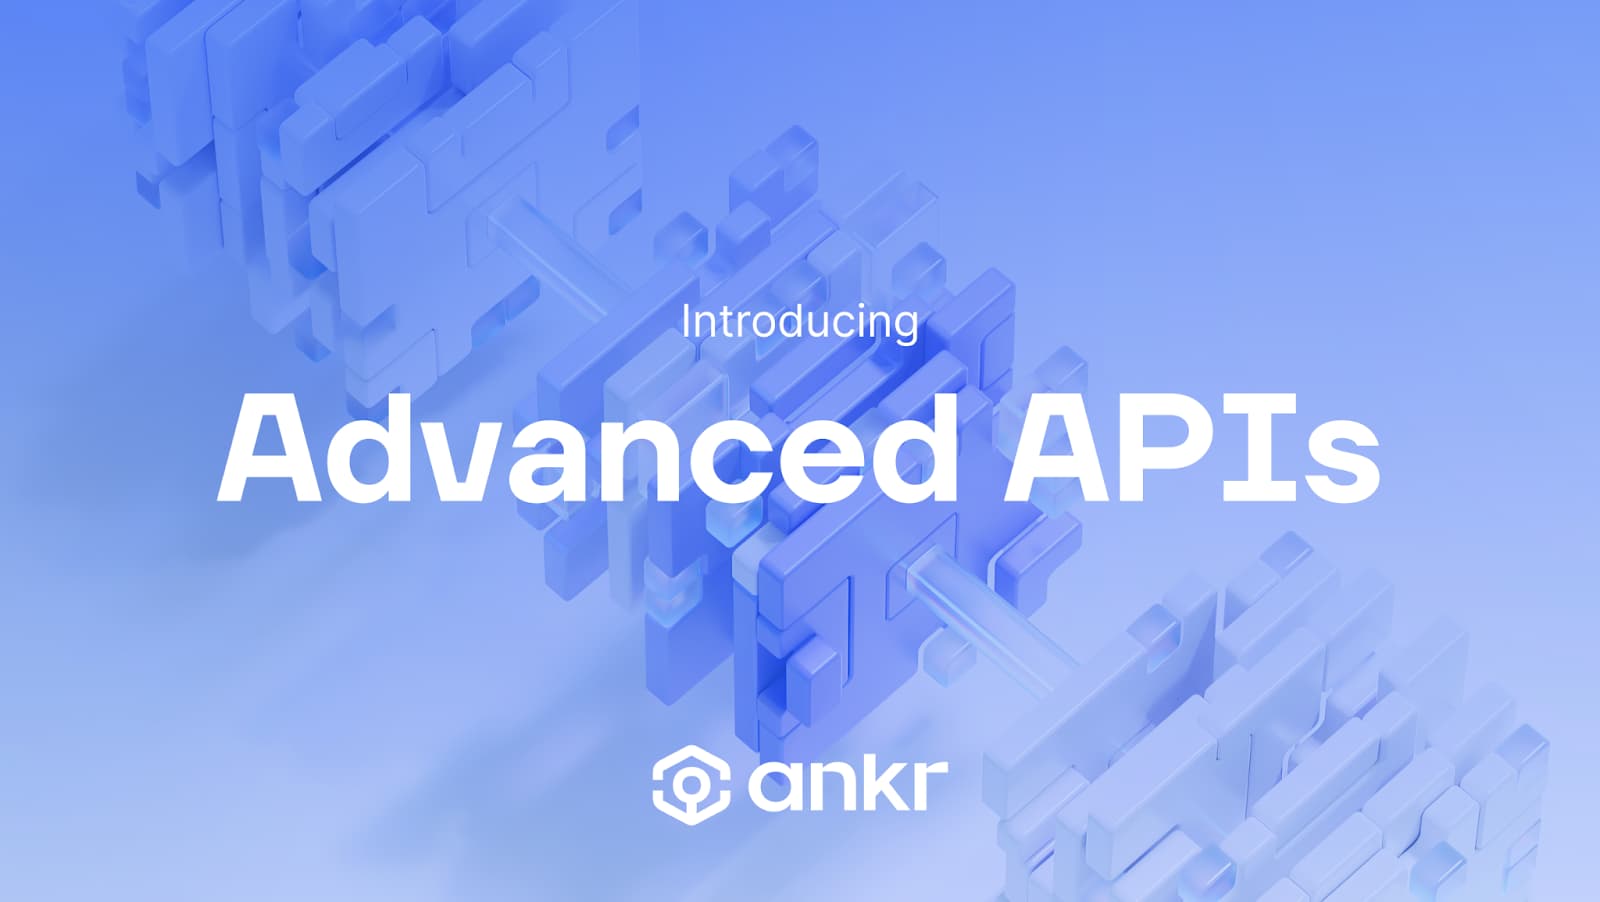 Ankr_s_Advanced_AP_Is_30e0082278.jpg